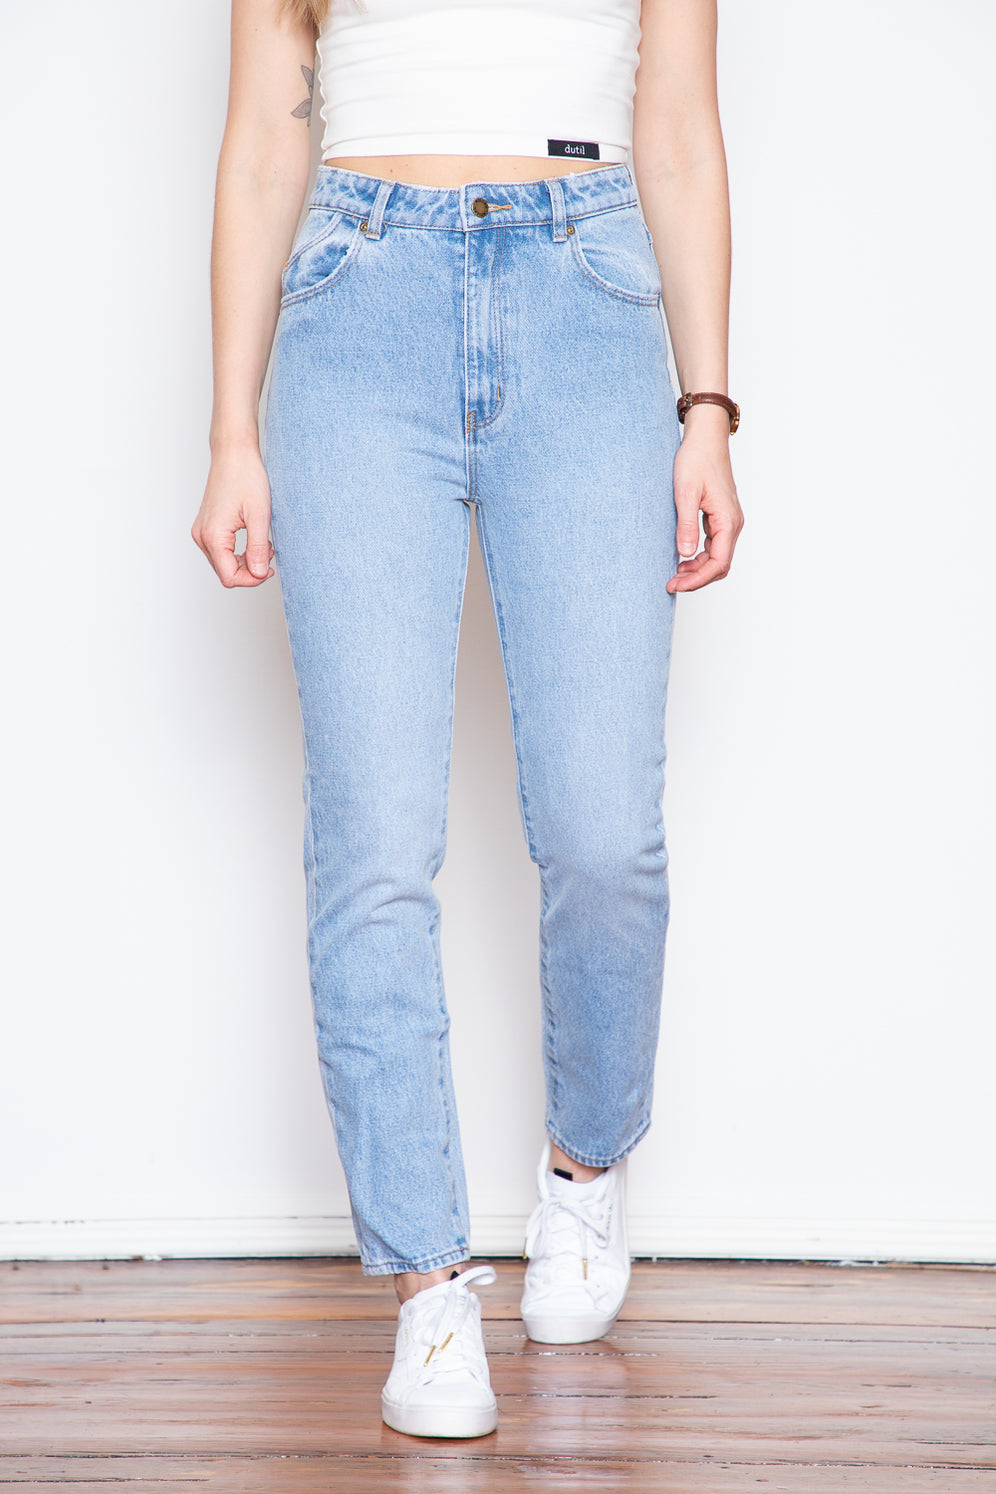 Jeans for Women | Ladies Jeans | Dutil Denim Canada & USA